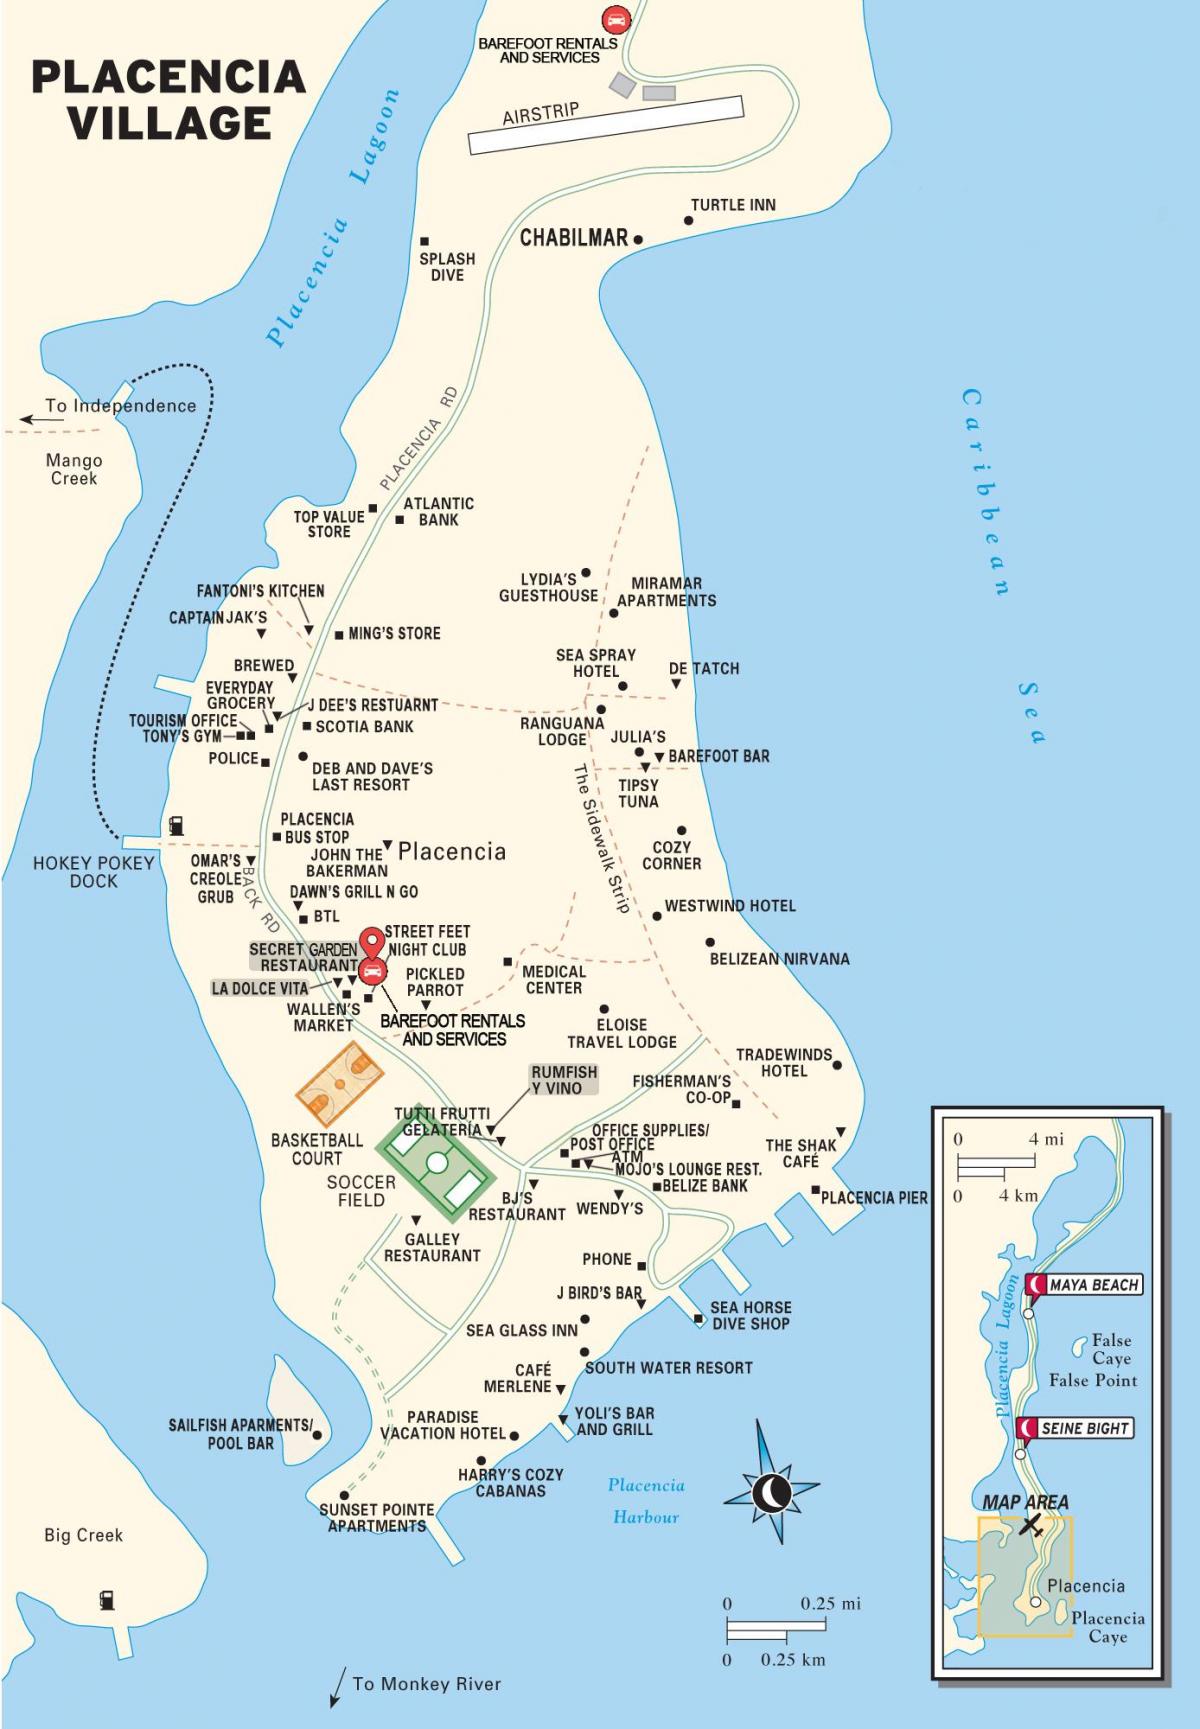 placencia village, Belize haritası 